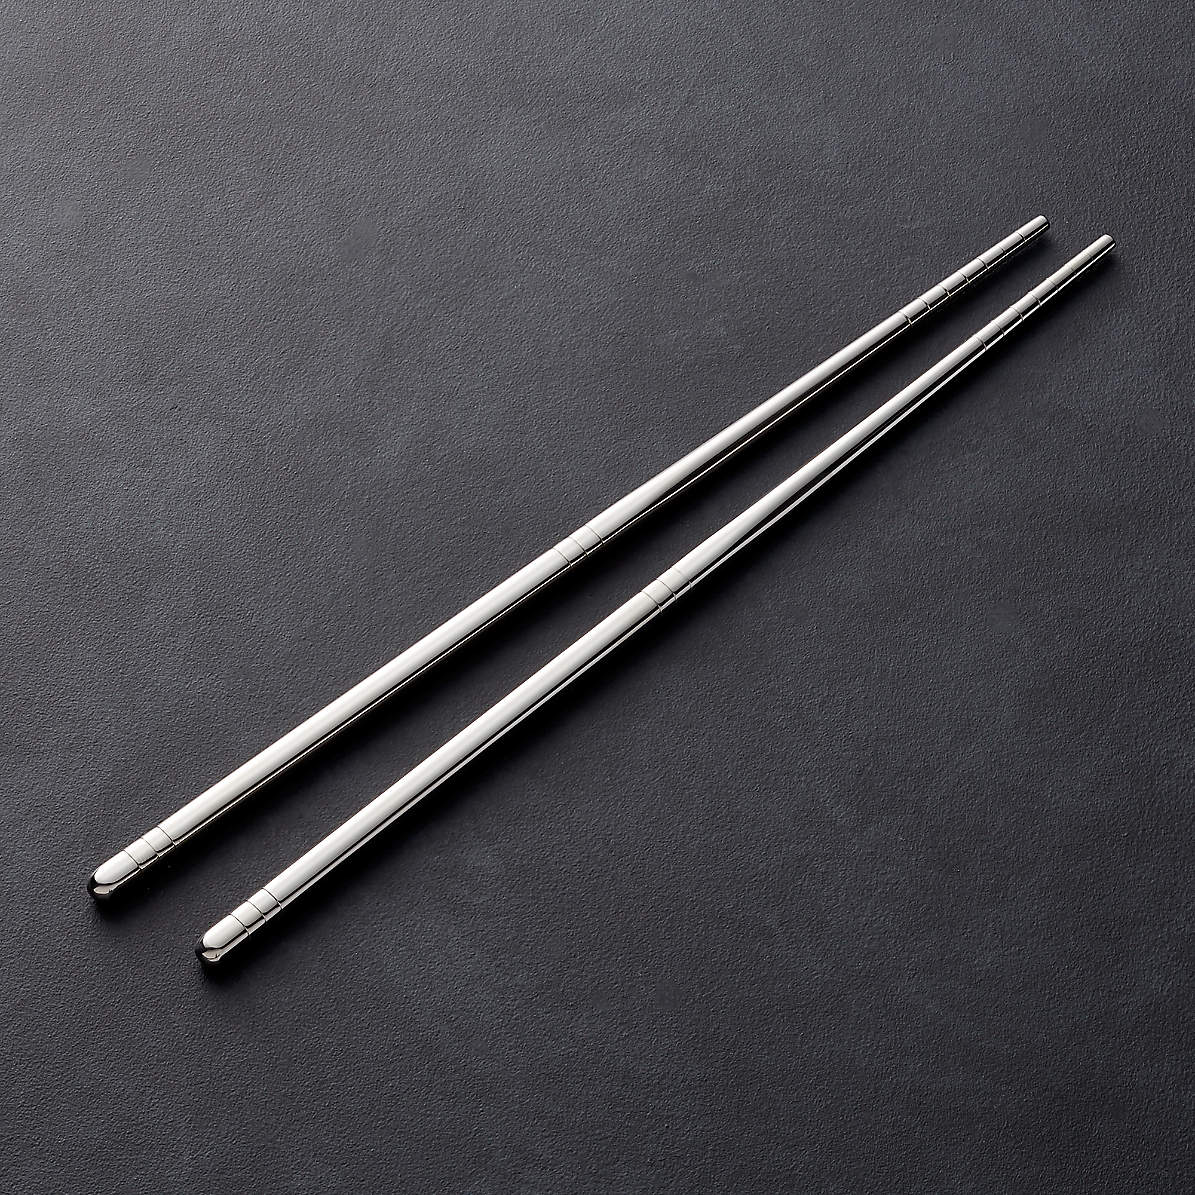 5Pairs/set Stainless Steel Chopsticks Chop Sticks Gift Set Assorted Home E7 